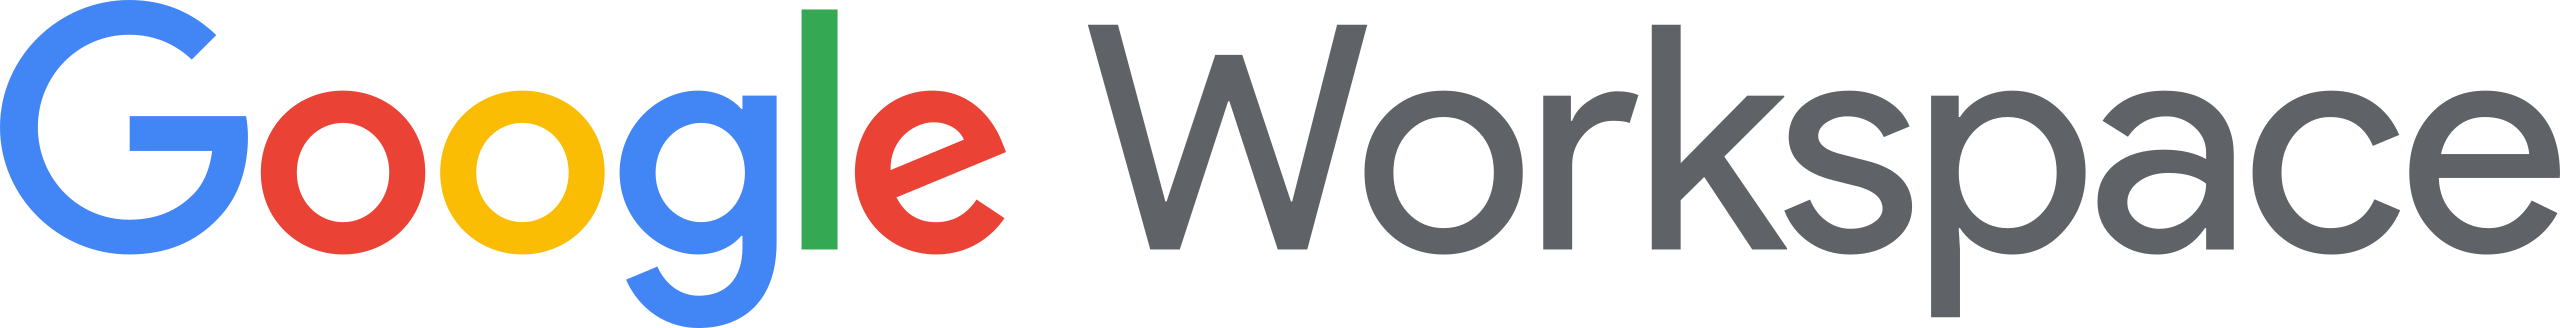 File:Google Workspace Logo.svg - Wikimedia Commons